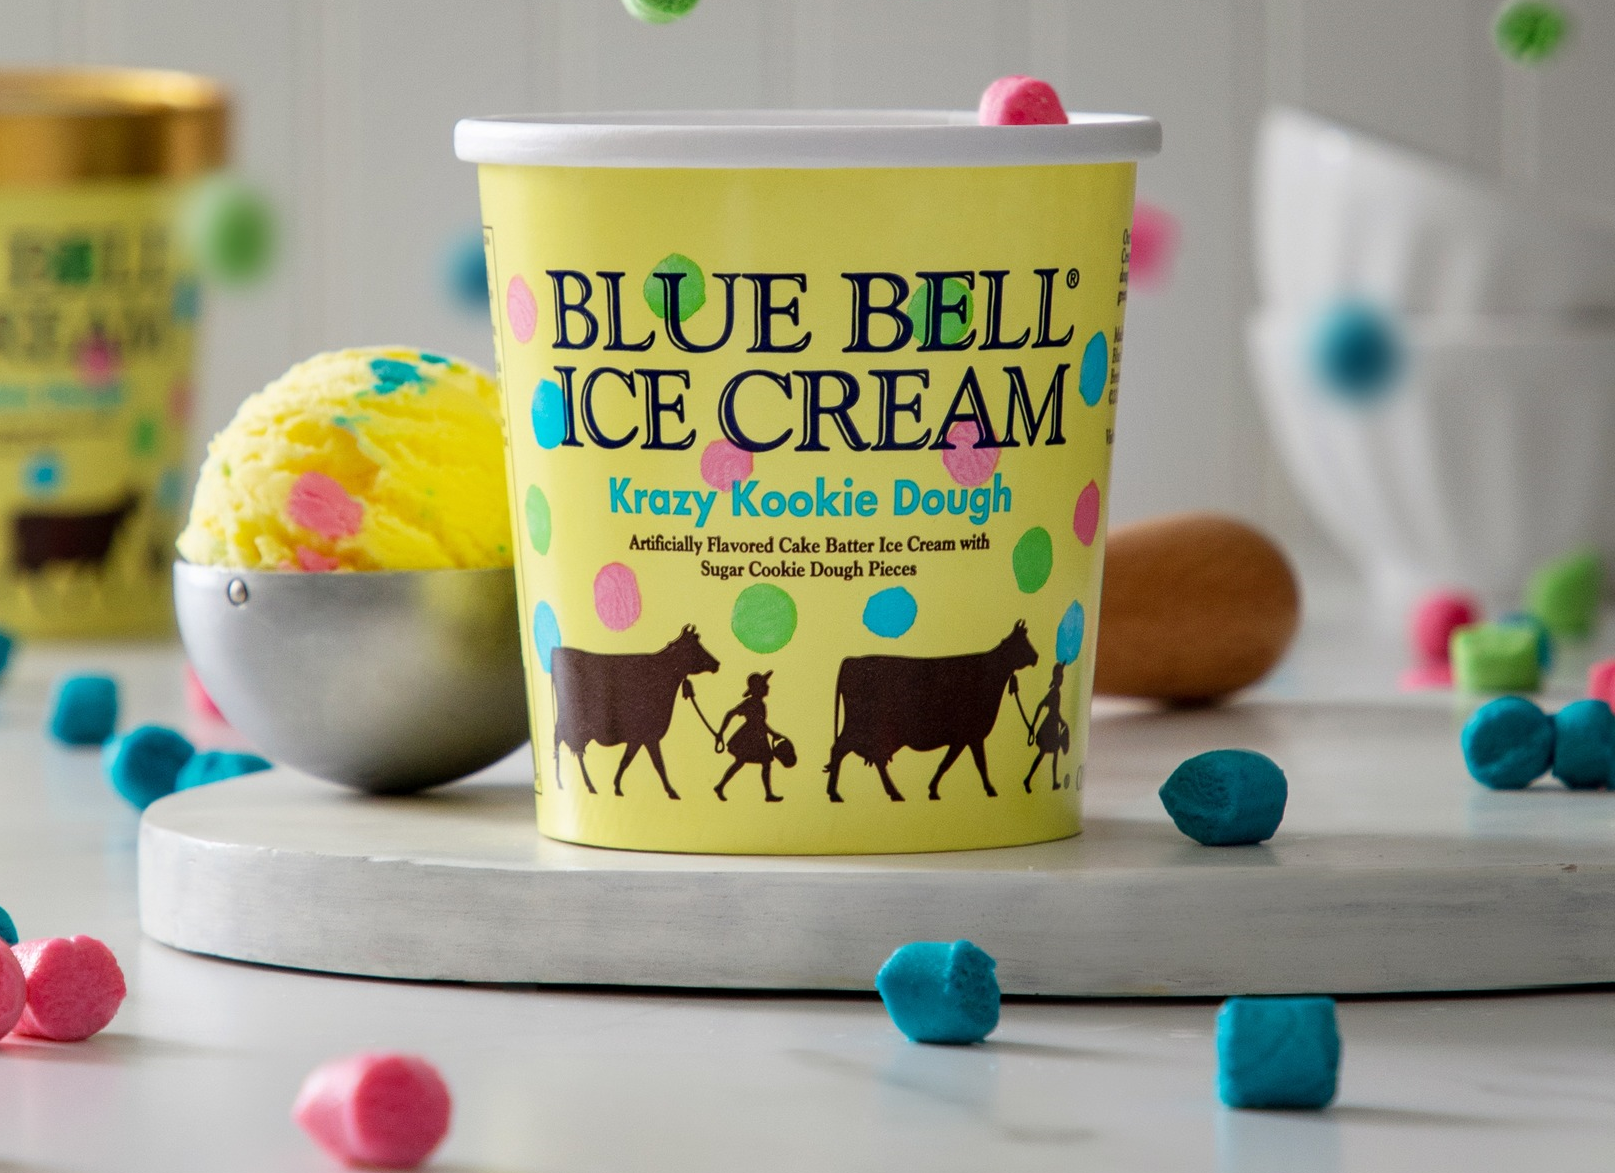 Blue Bell Ice Cream announces return of Krazy Kookie Dough